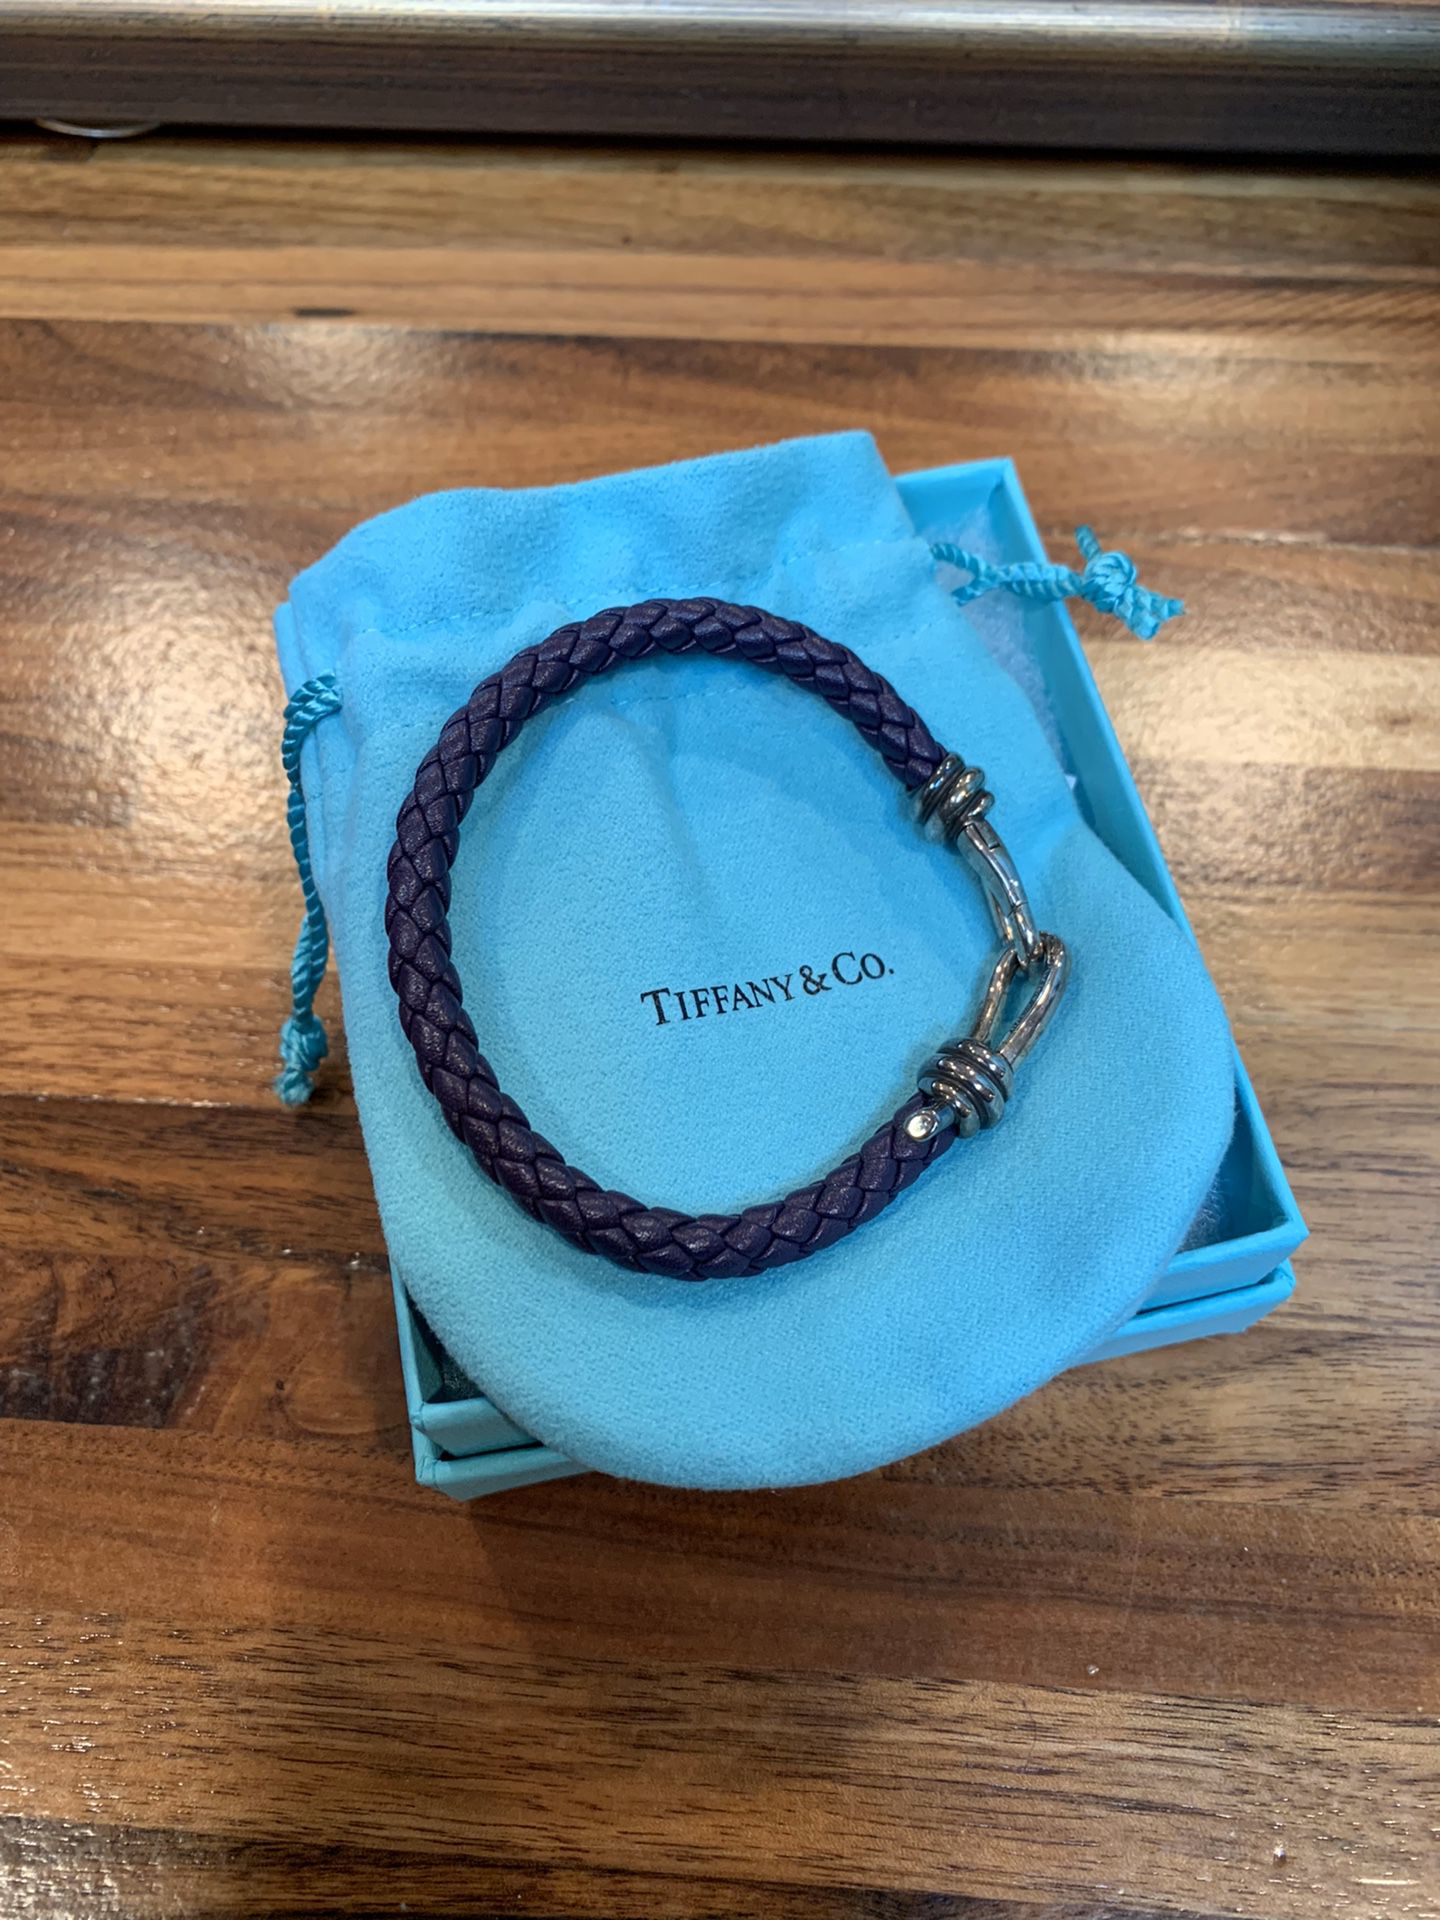 Tiffany & co. Knot single braid bracelet purple